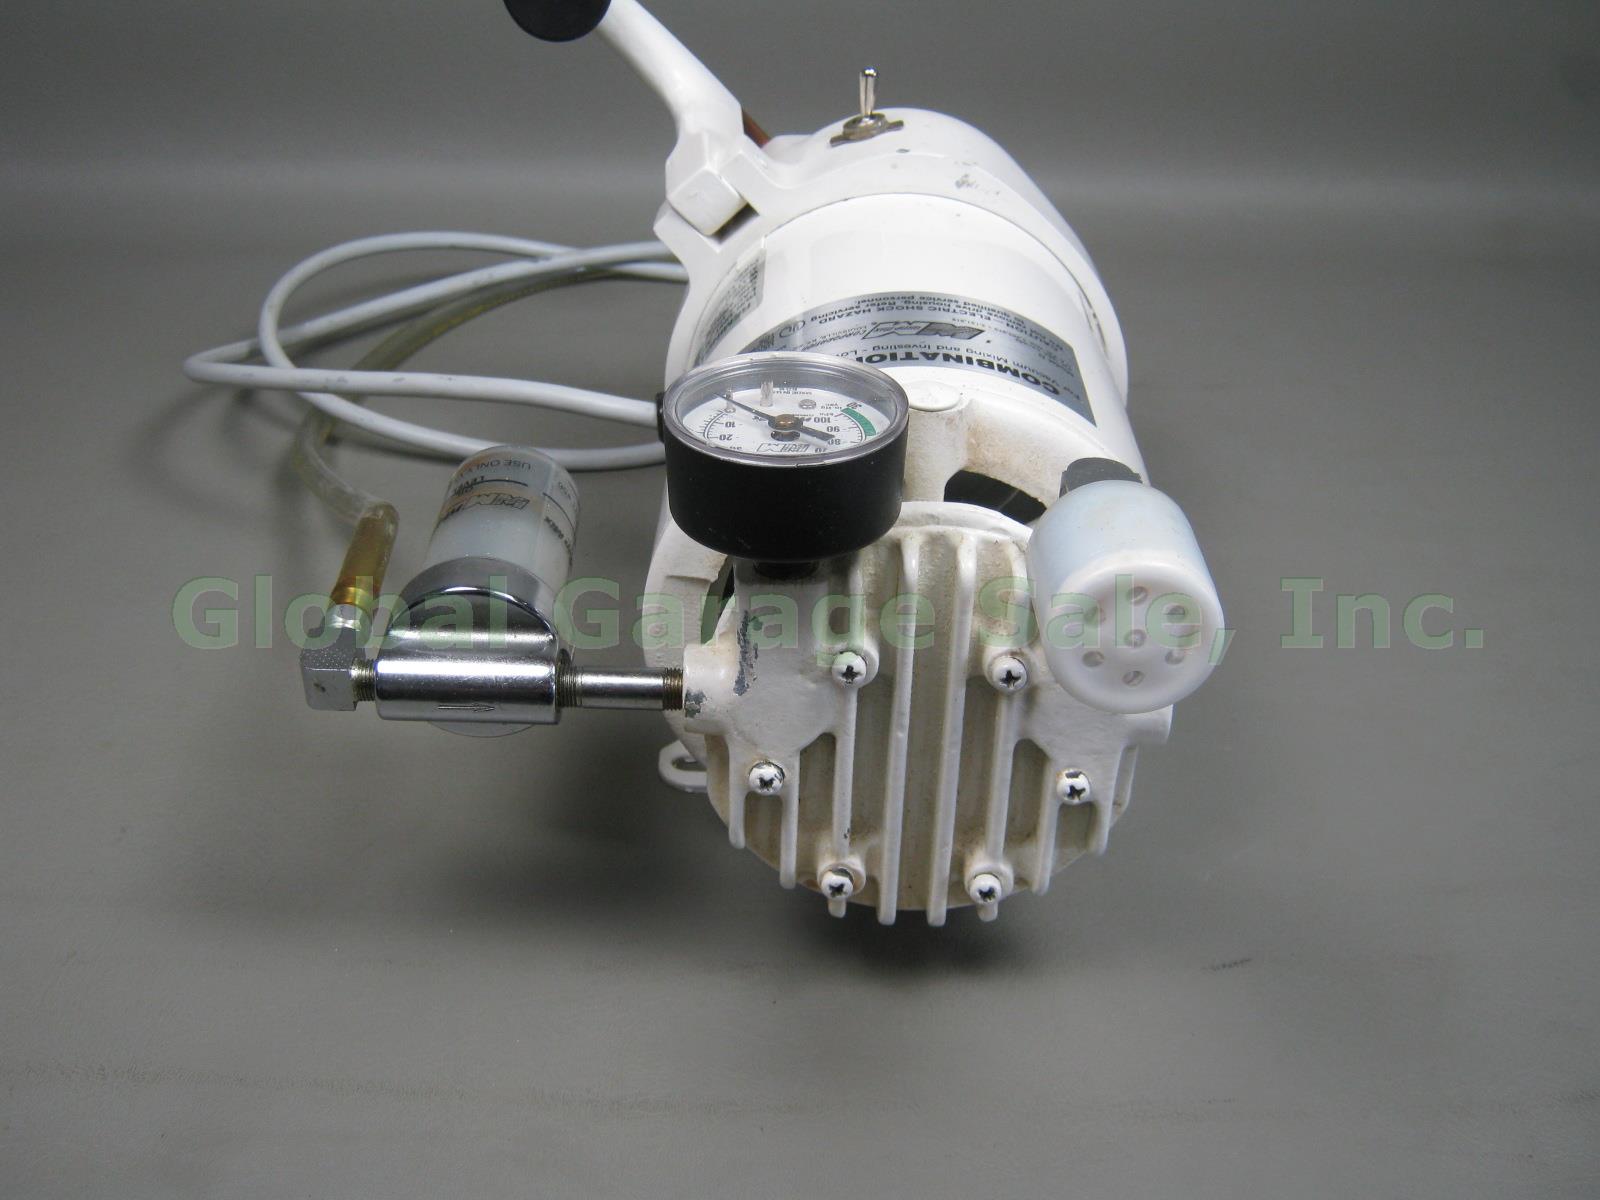 Whip Mix Combination Unit Dental Lab Vacuum Mixer D W/ GE 1/4HP 115/230V Motor 4